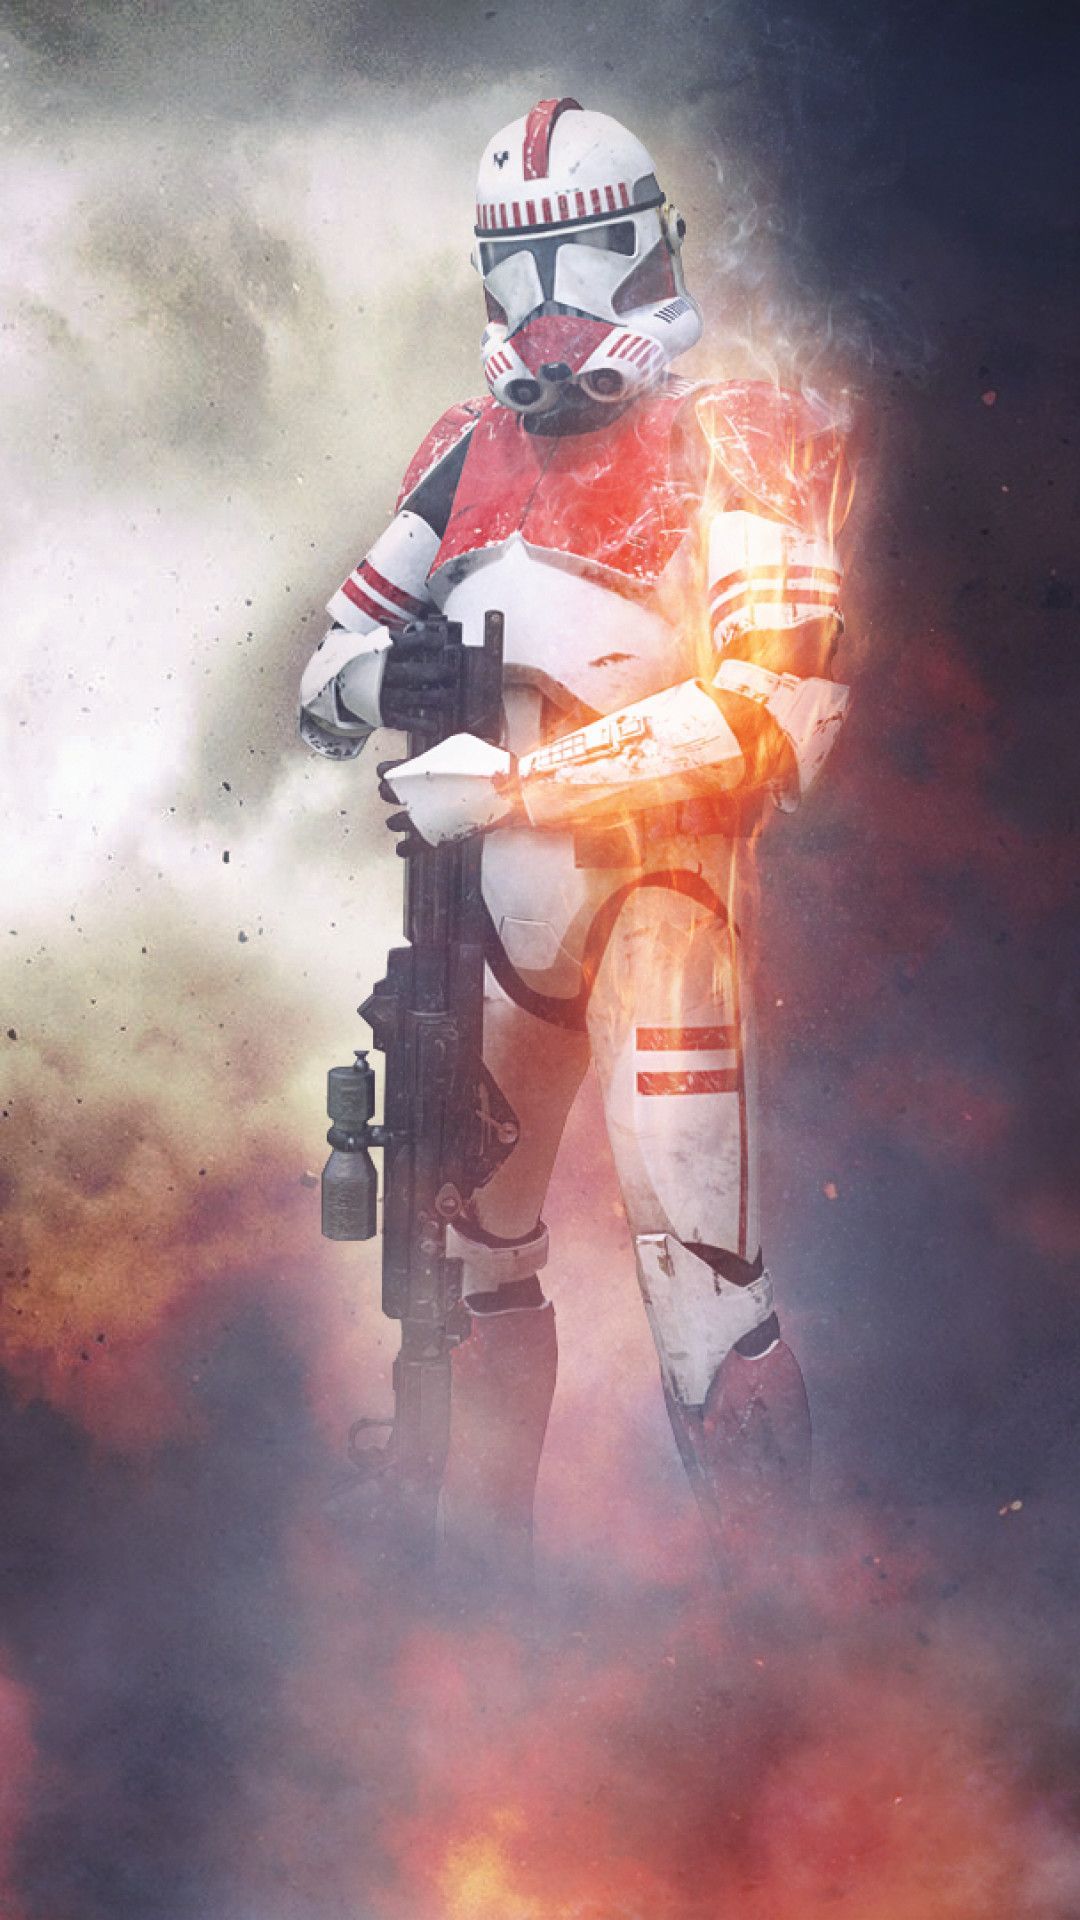 Clone Trooper iPhone Wallpaper. Star wars wallpaper, Star wars clone wars, Star wars